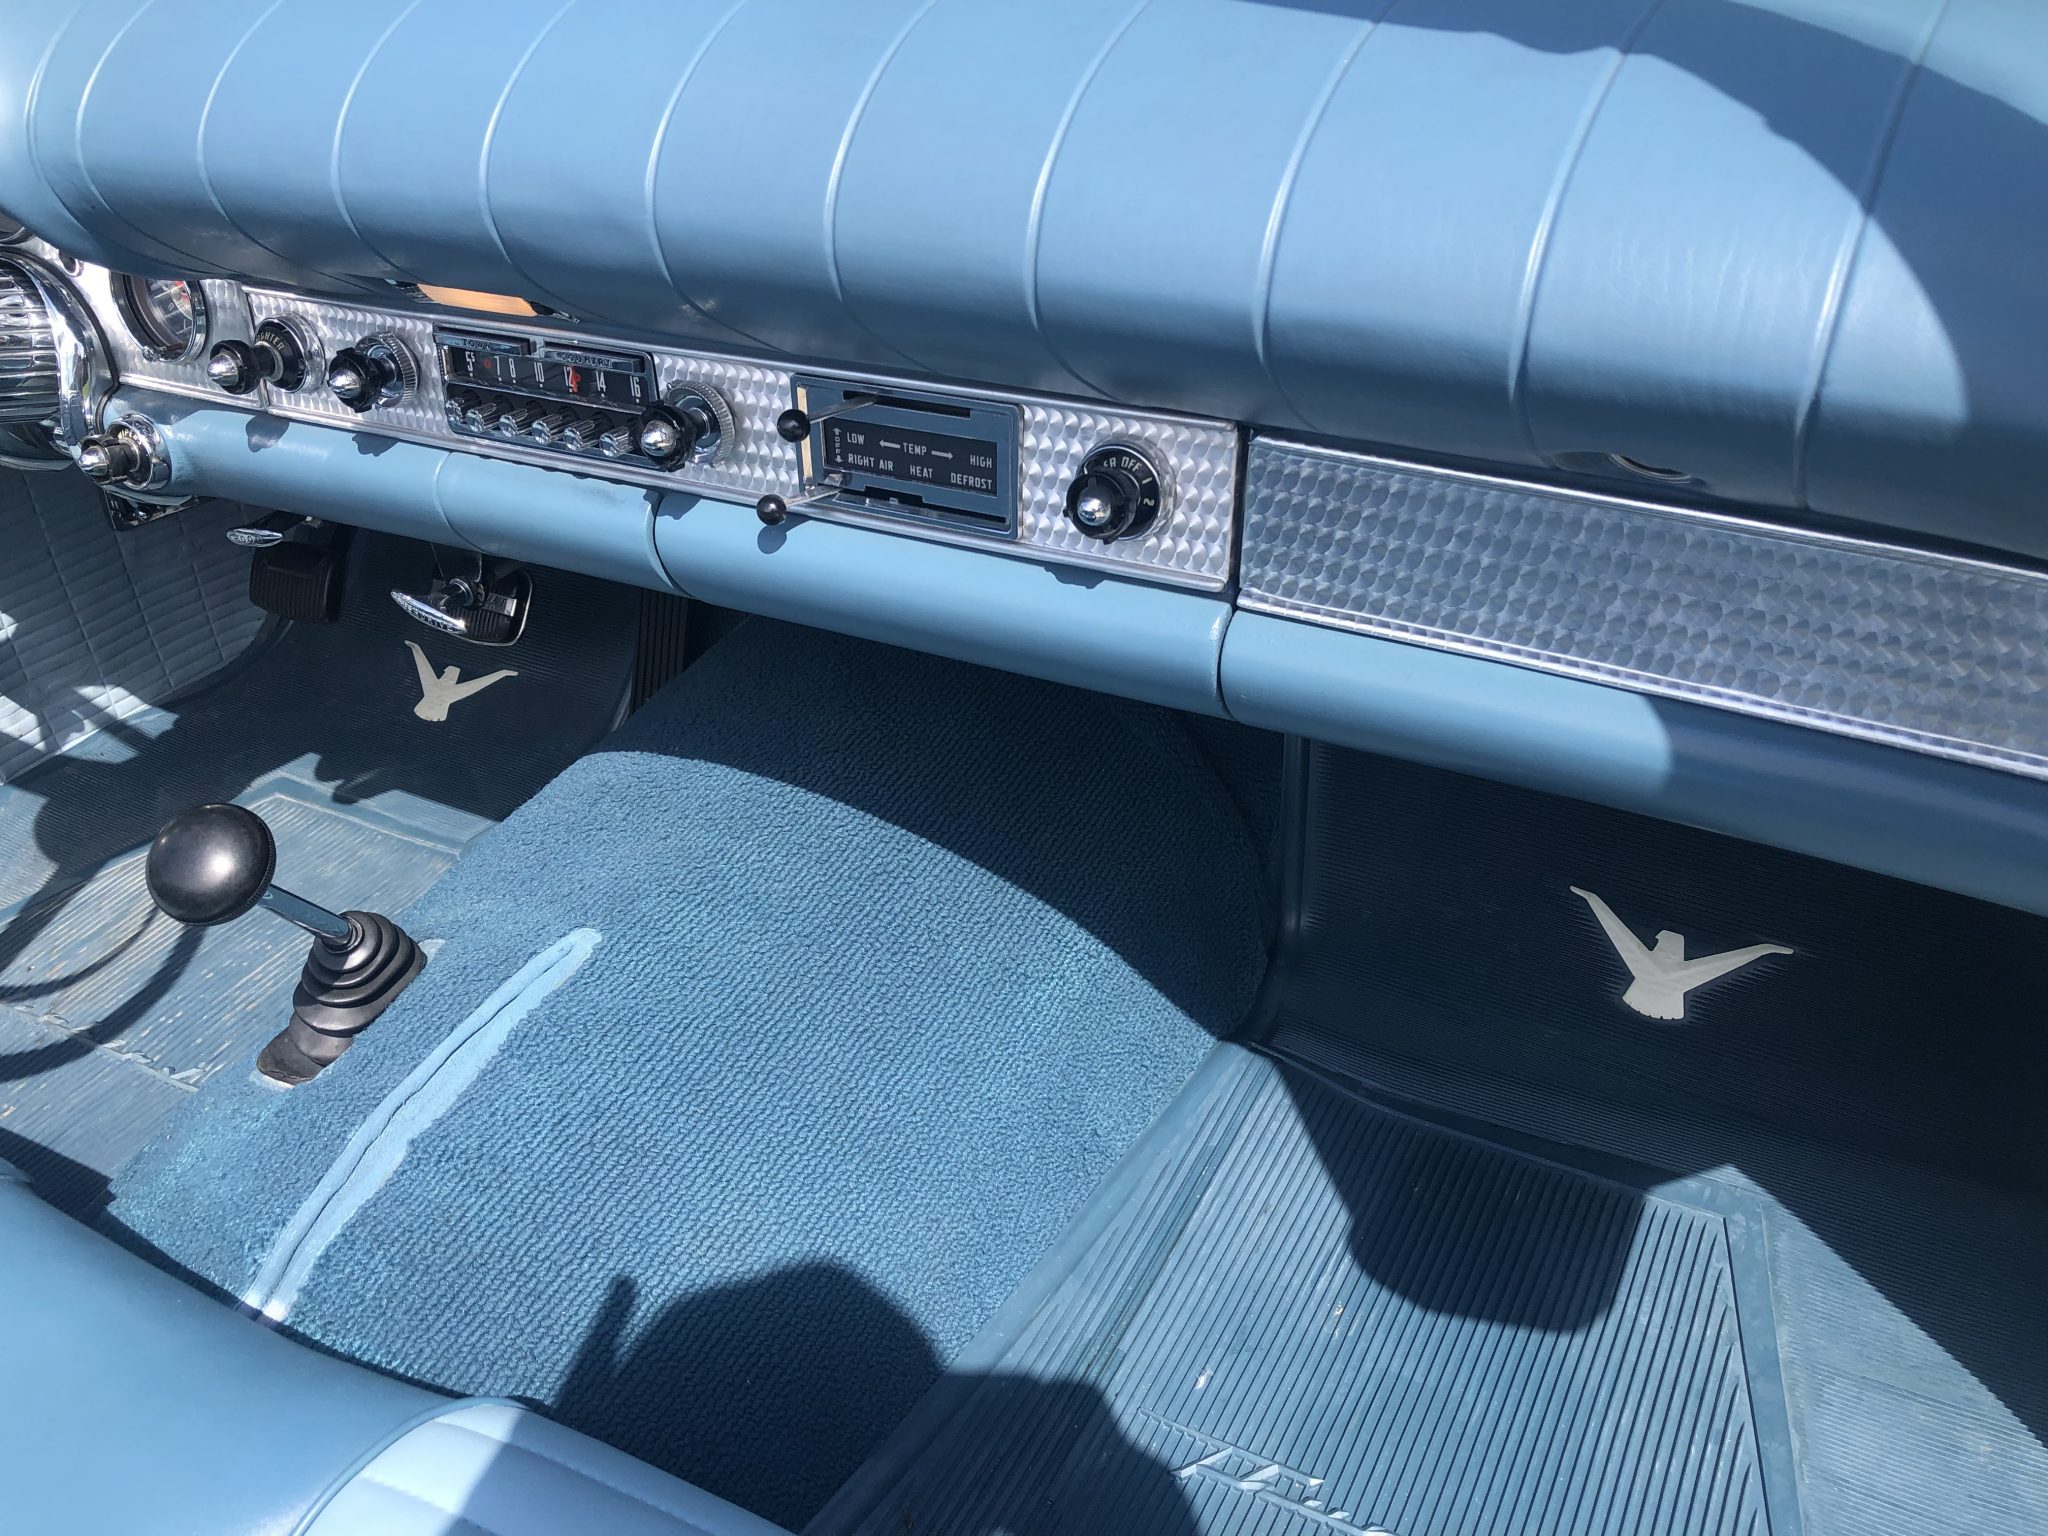 1957 E-Code Ford Thunderbird Two Tone Interior